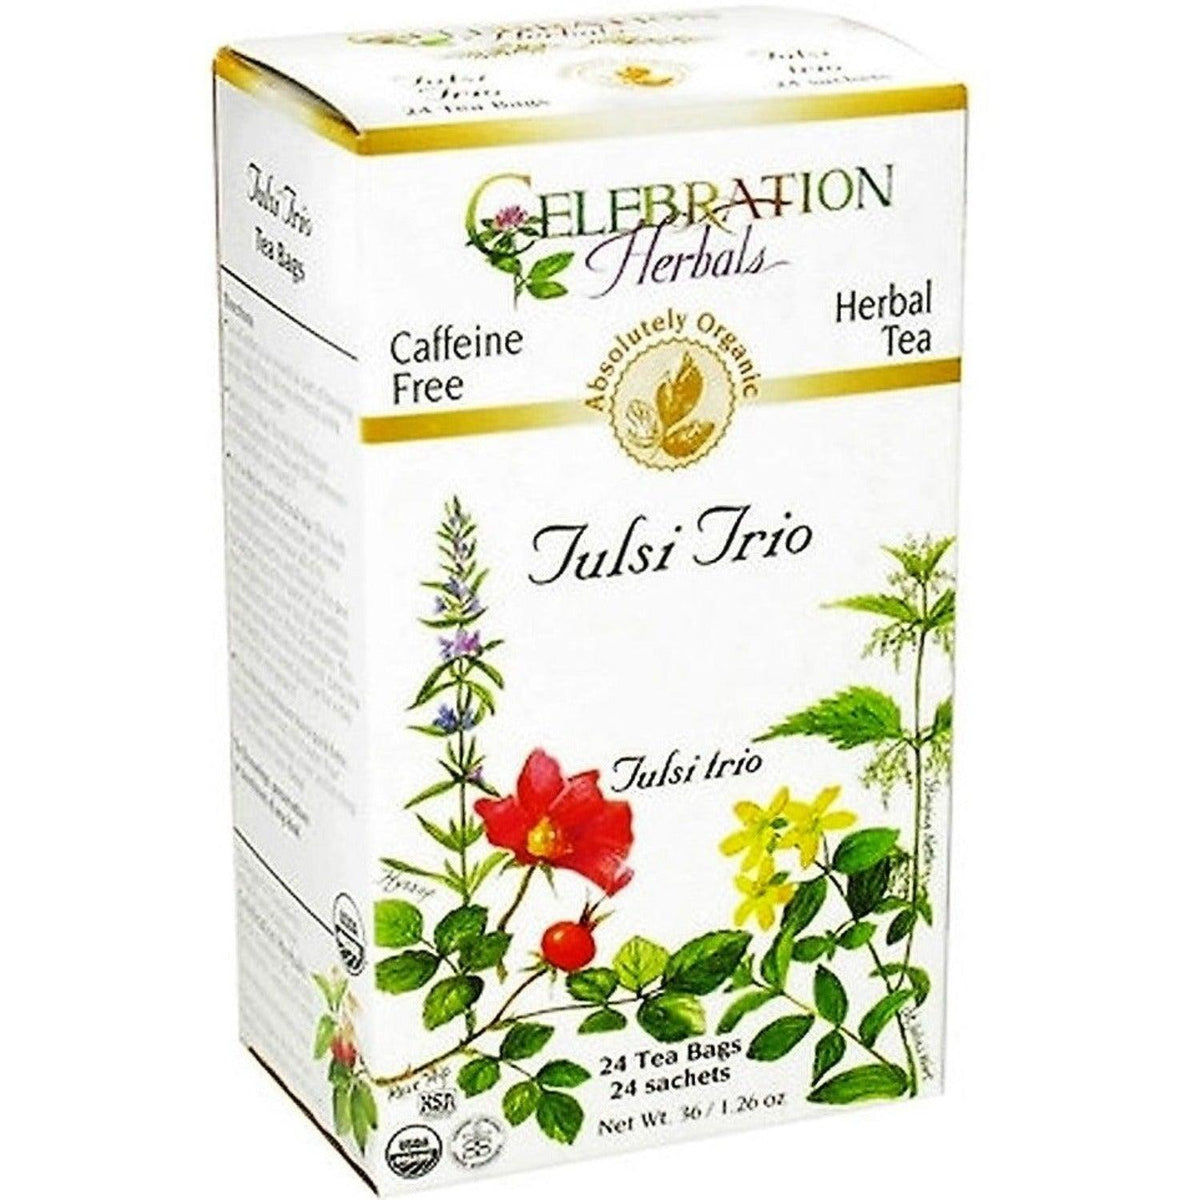 Celebration Herbals Tulsi Trio Herbal Tea Caffeine Free 24 Tea Bags Food Items at Village Vitamin Store